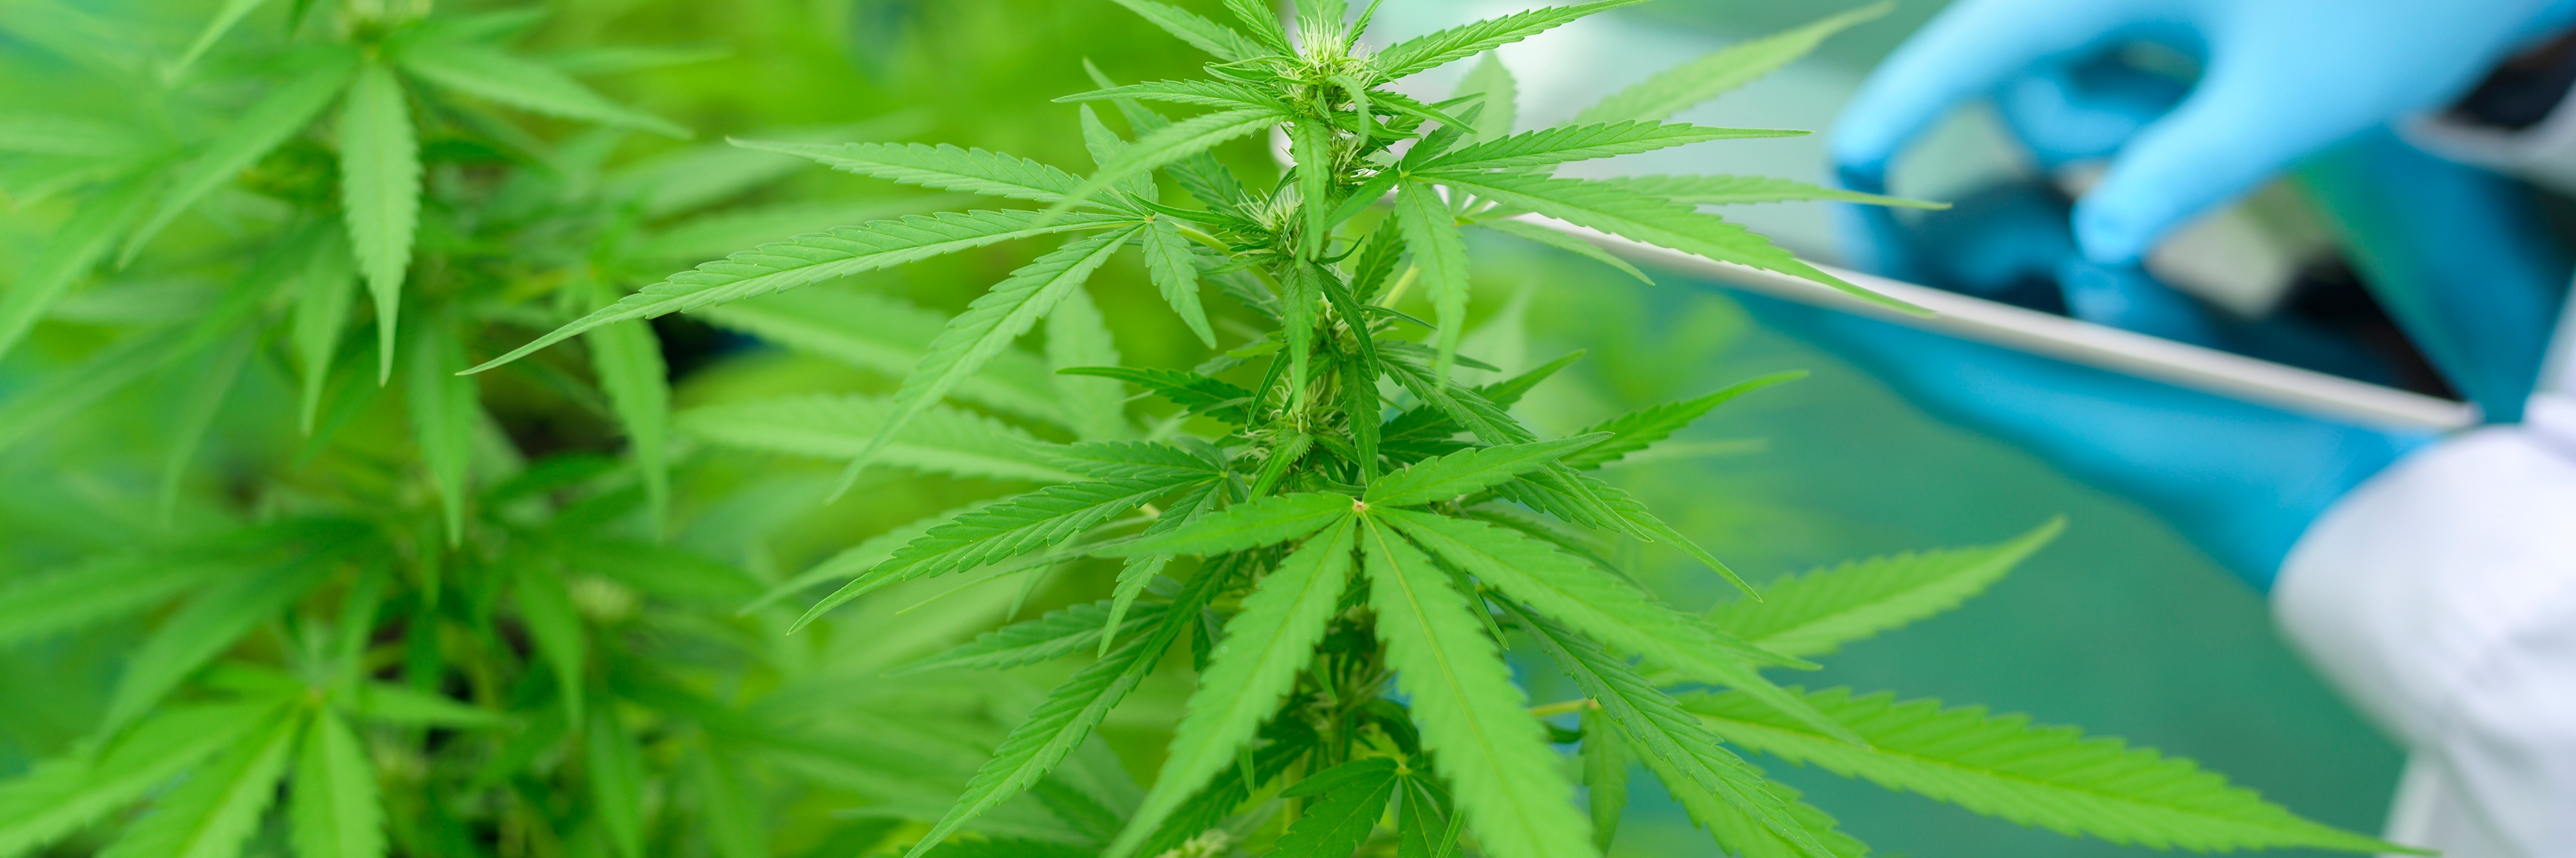 Cannabis plantation for medicinal use